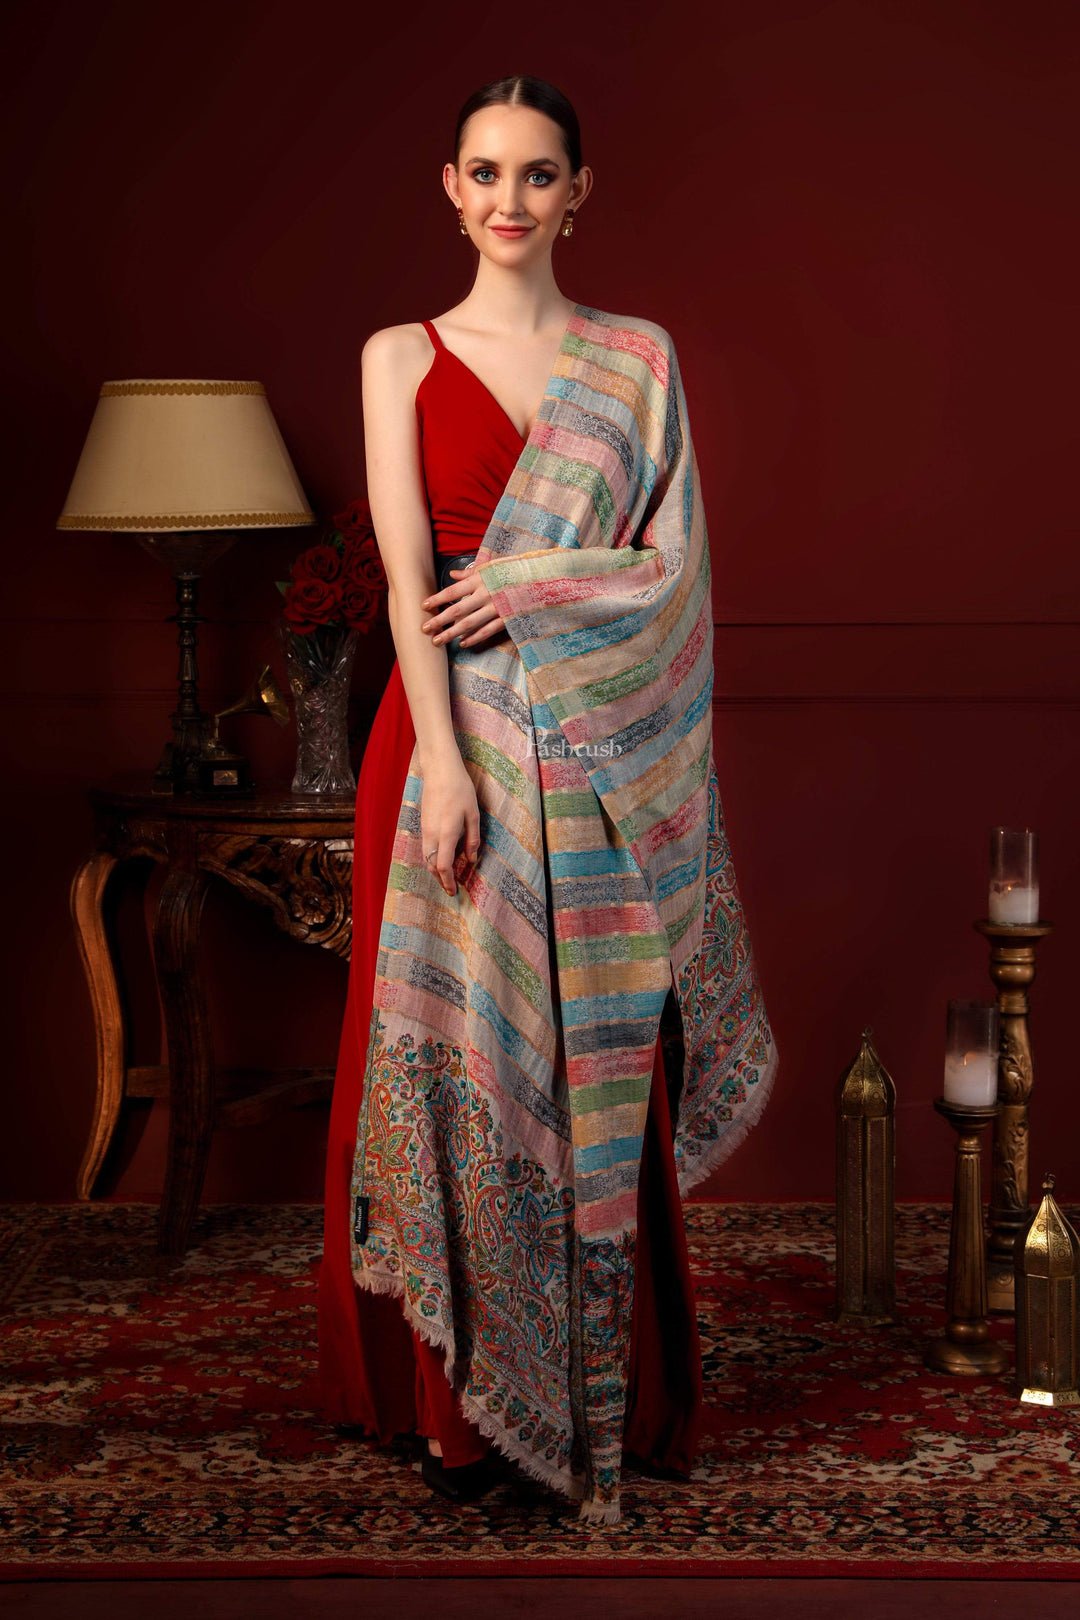 Pashtush India 70x200 Pashtush Womens Twilight Striped Scarf, With Shimmery Zari Thread Weave